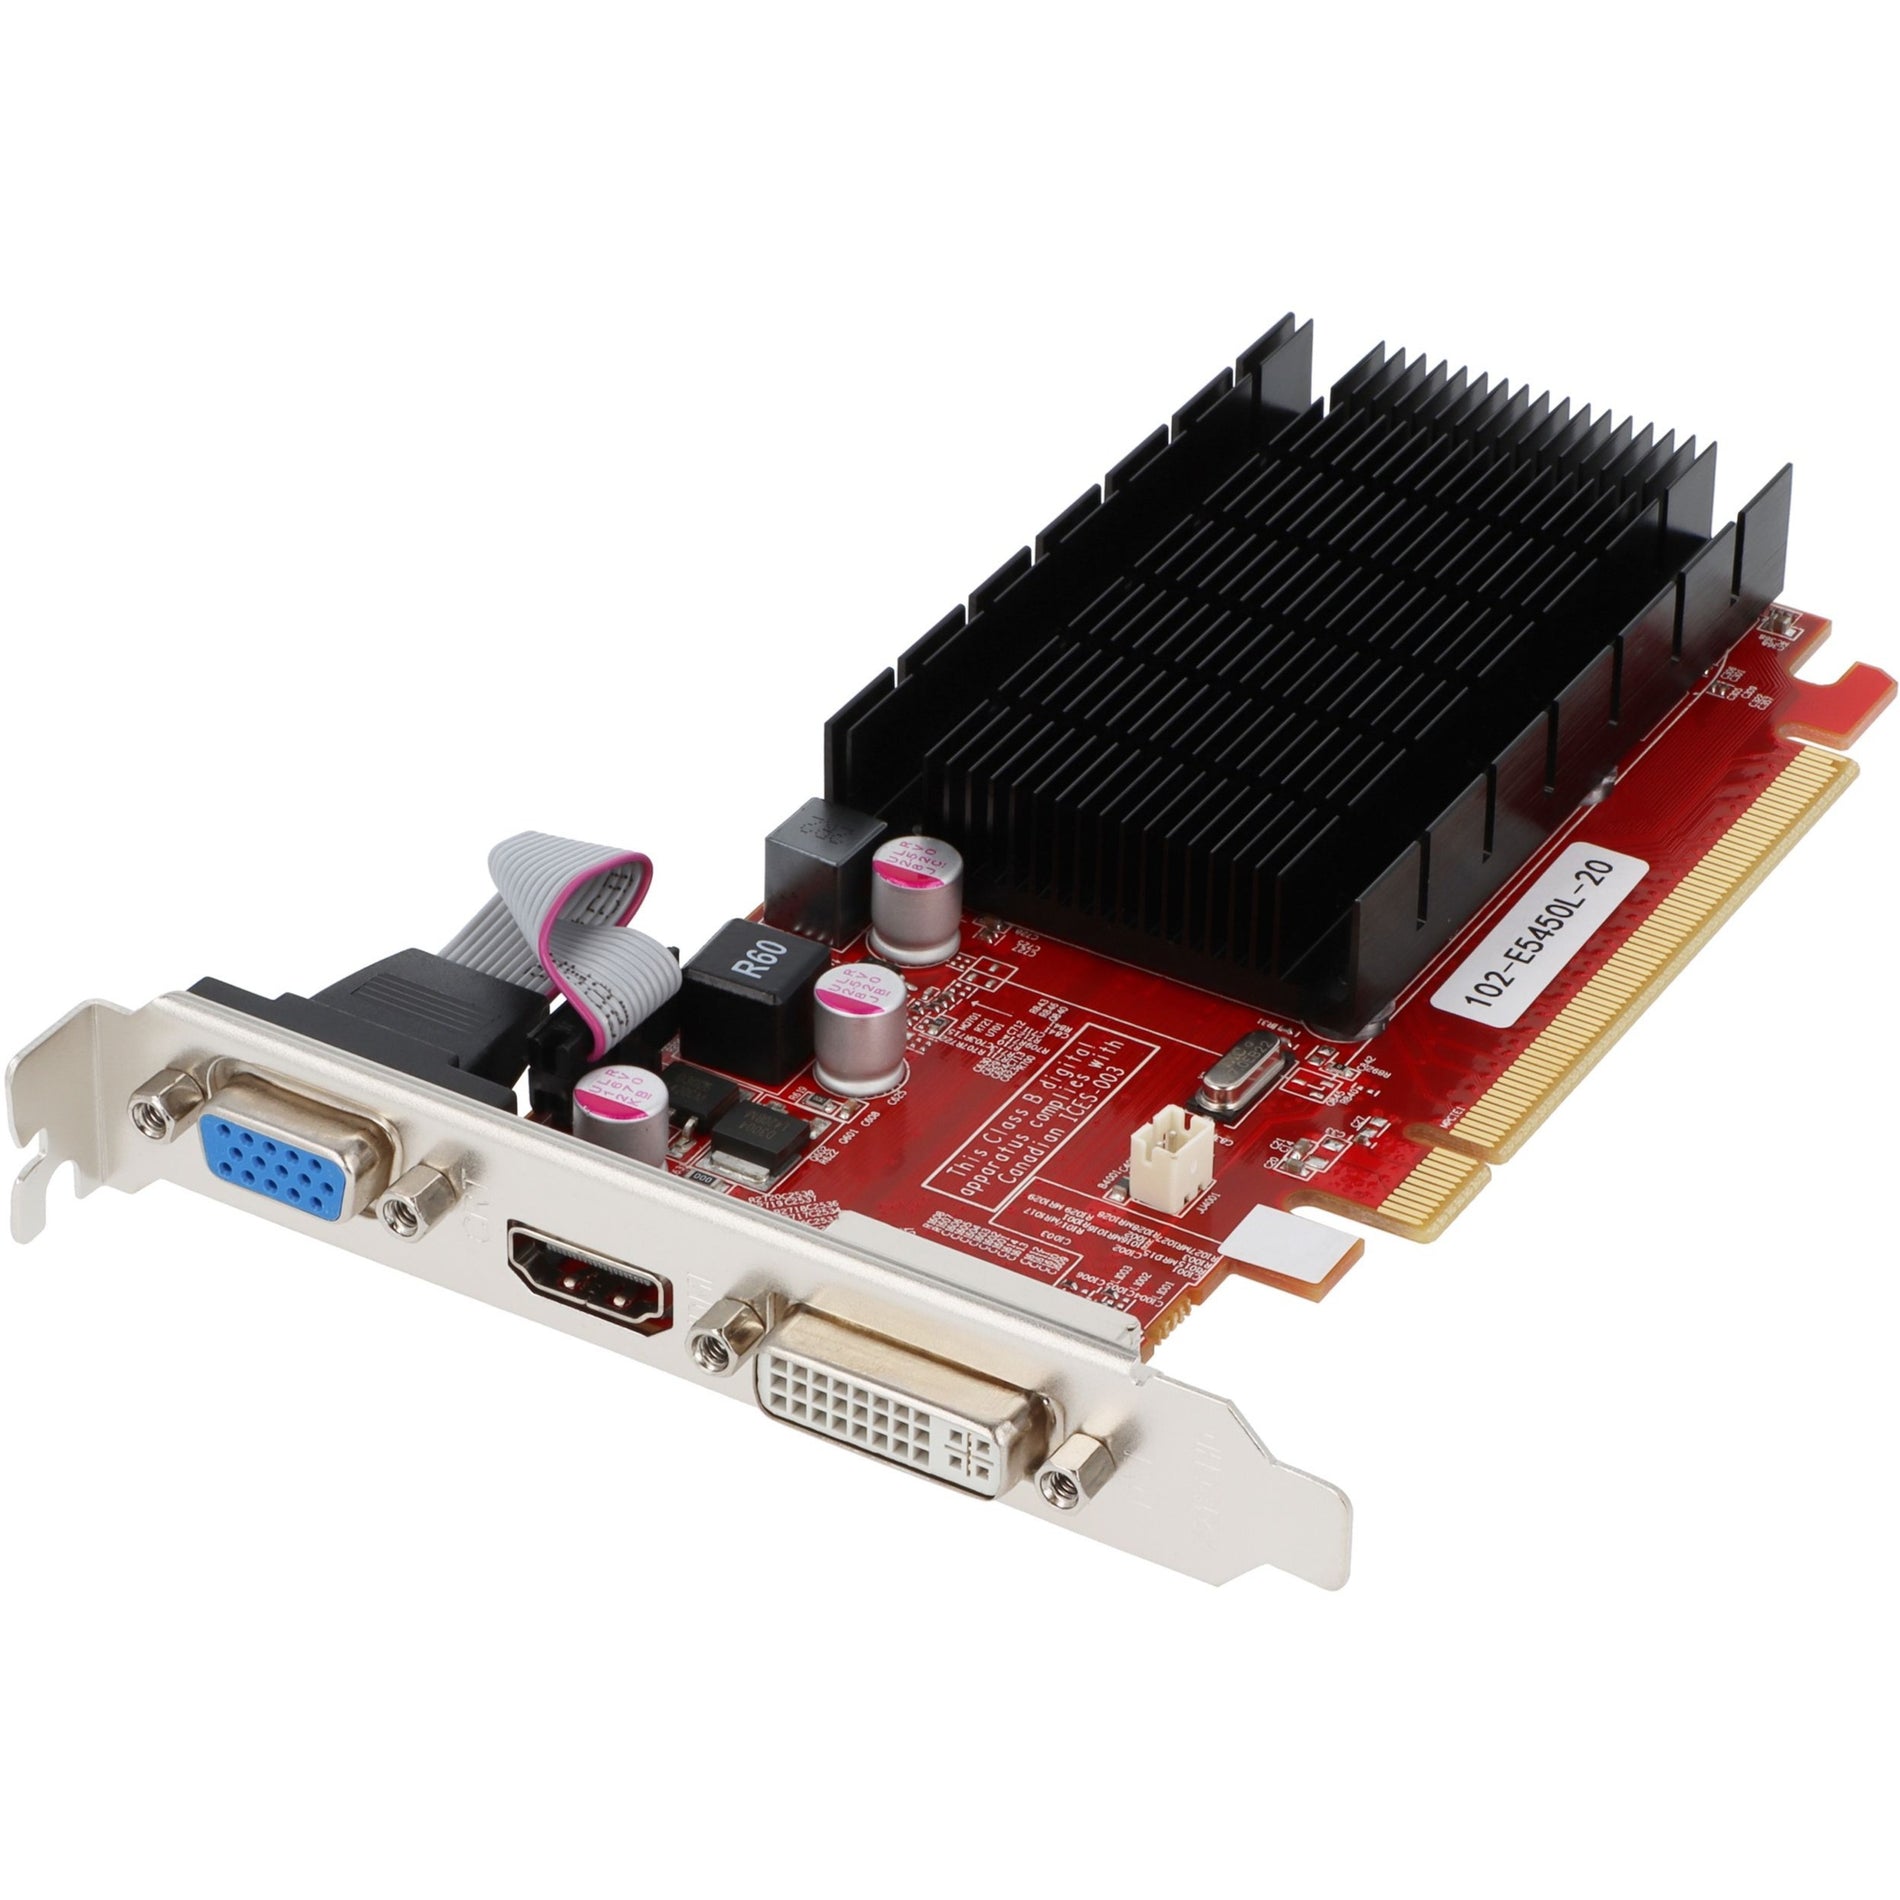 VisionTek 900356 Radeon HD 5450 Graphics Card, 2GB DDR3 SDRAM, DirectX 11.0, HDMI, VGA, DVI